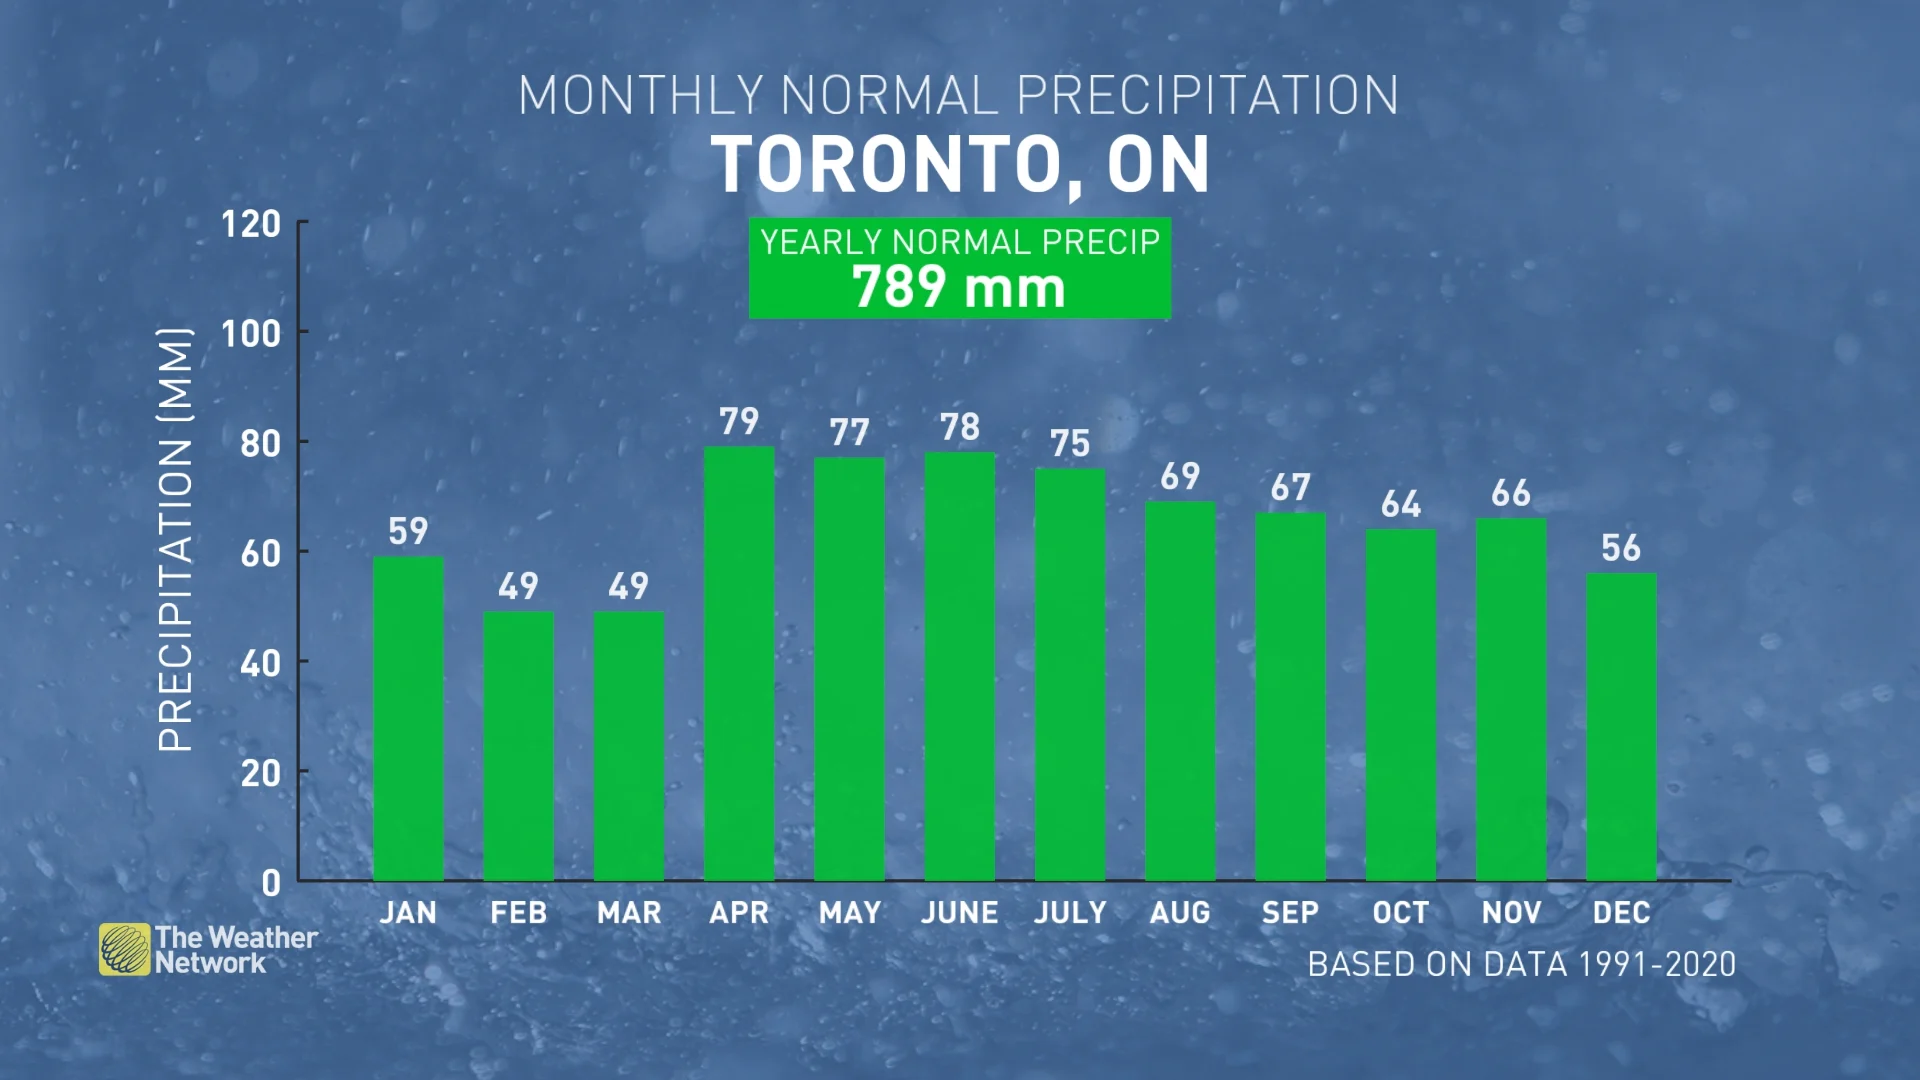 Toronto's summer precipitation averages